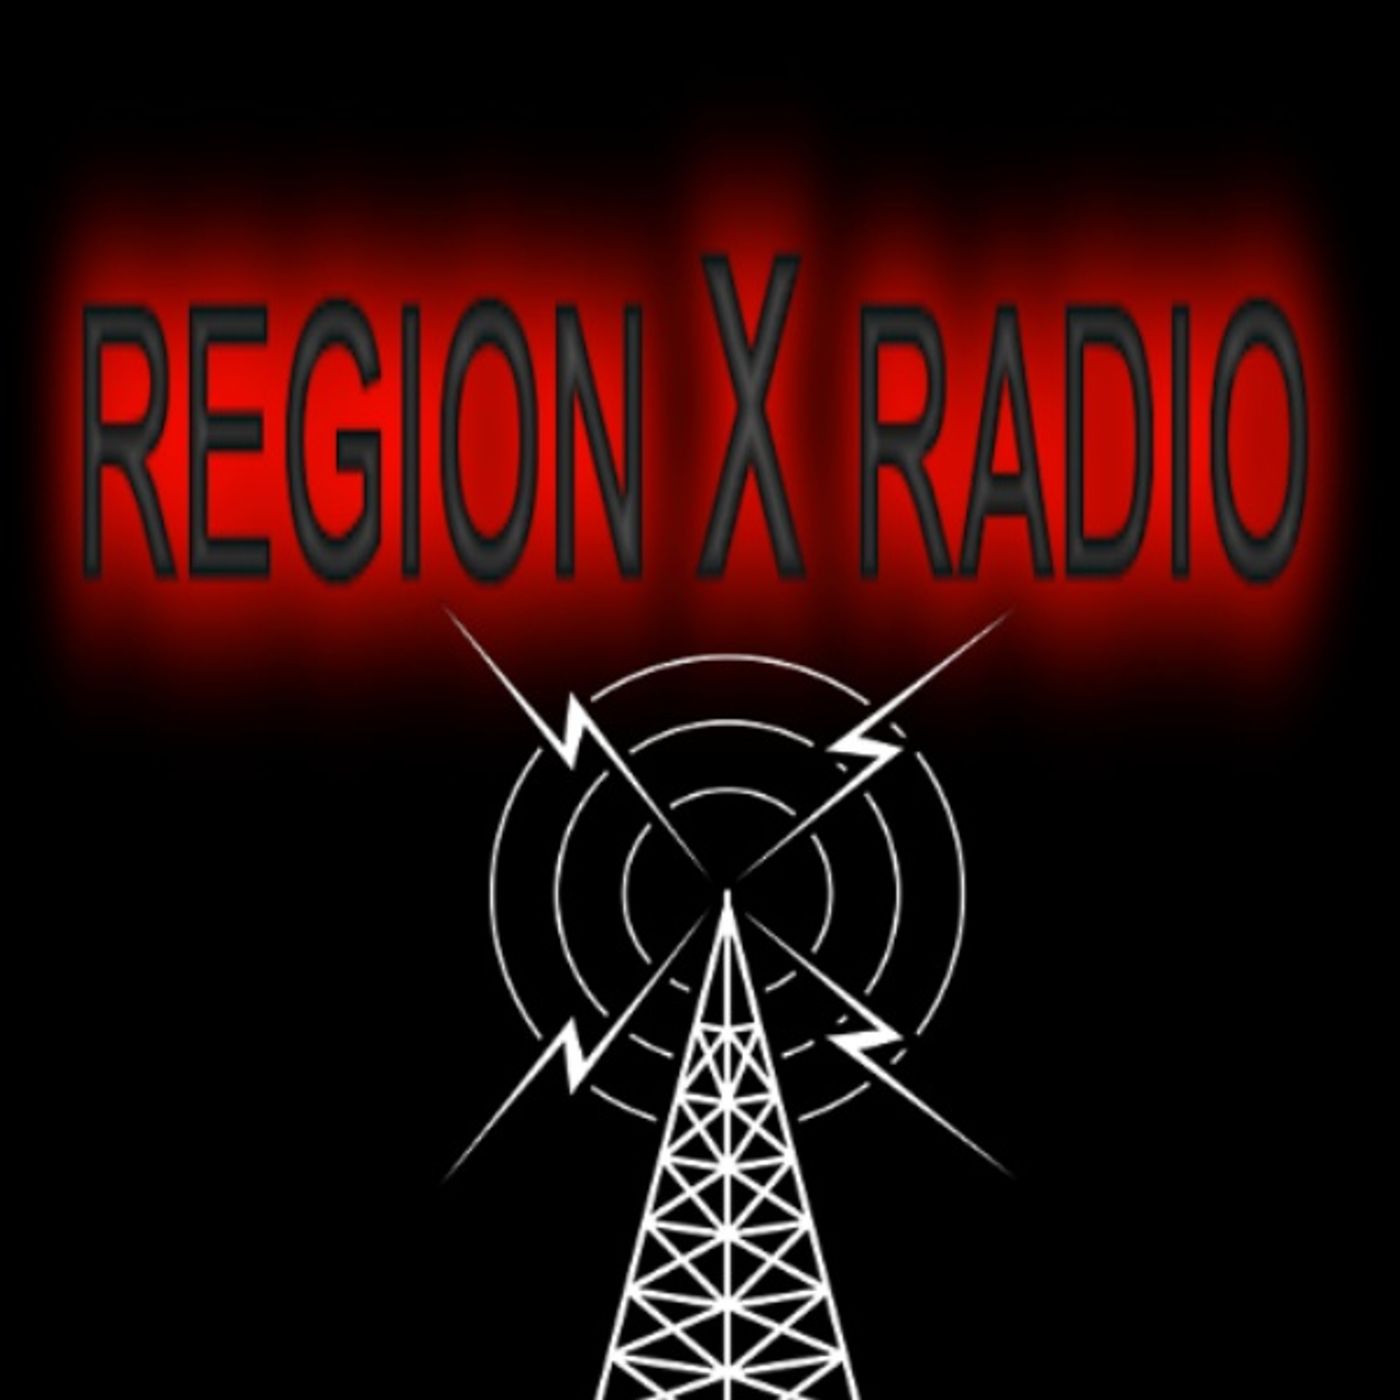 Region X Radio